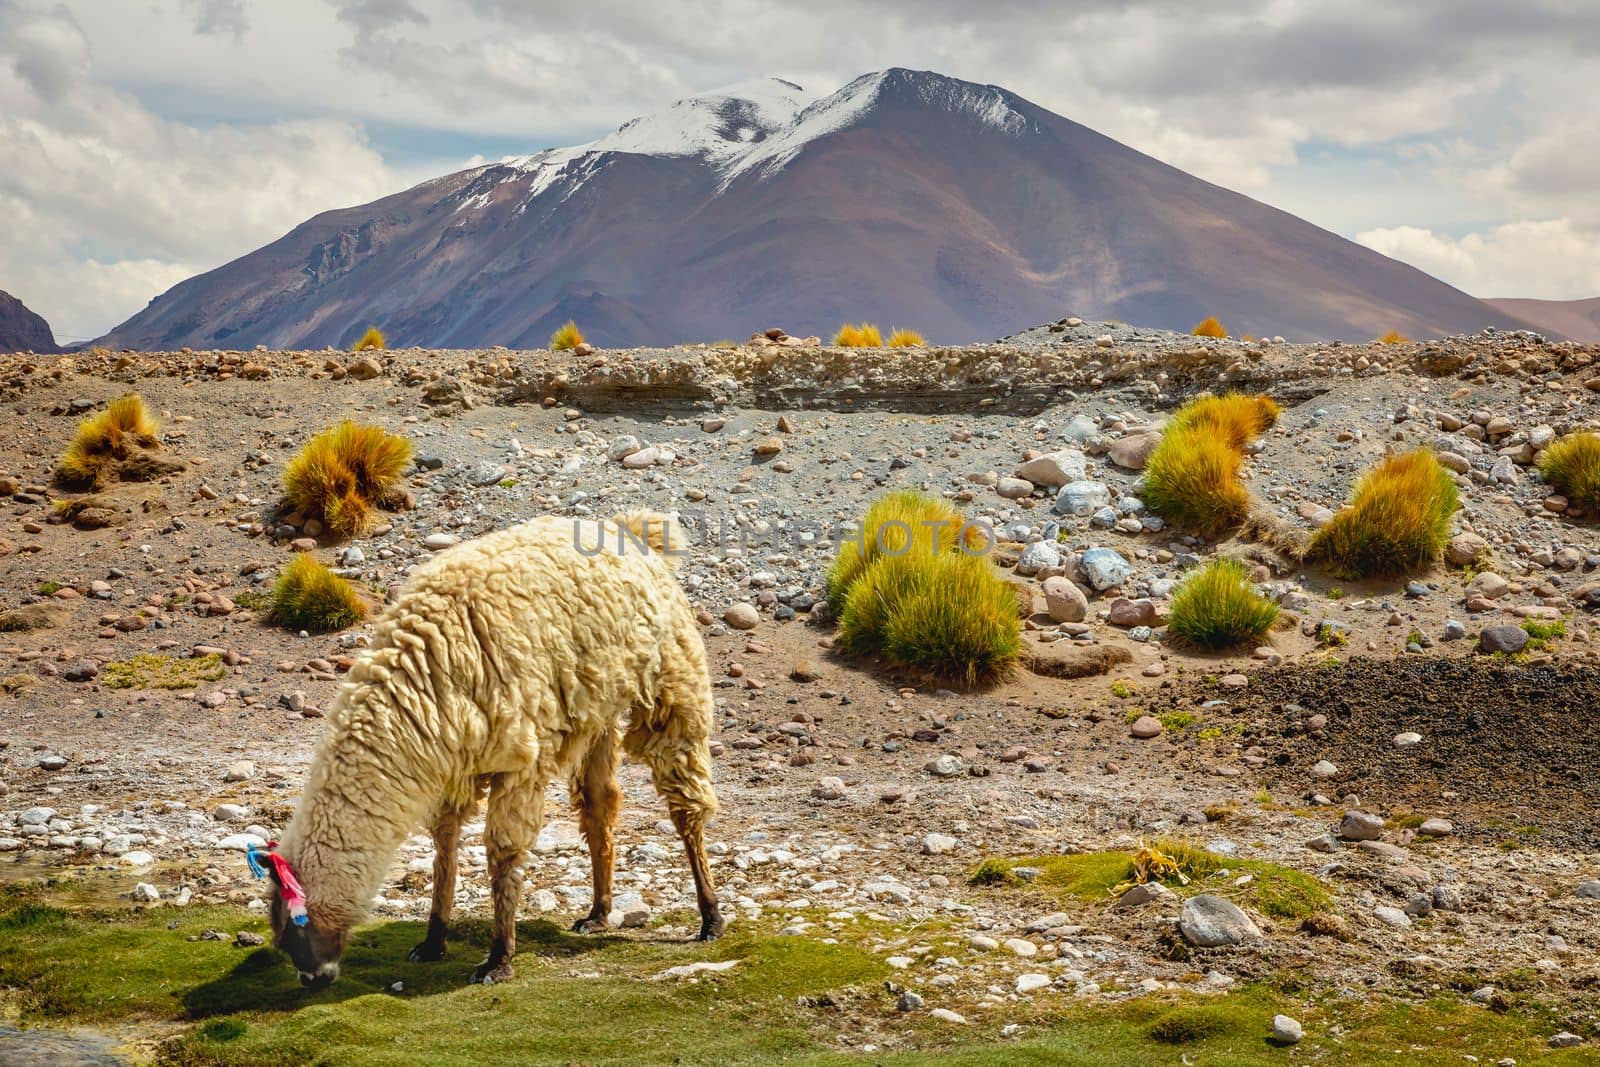 LLama alpaca in Bolivia altiplano near Chilean atacama border, South America by positivetravelart